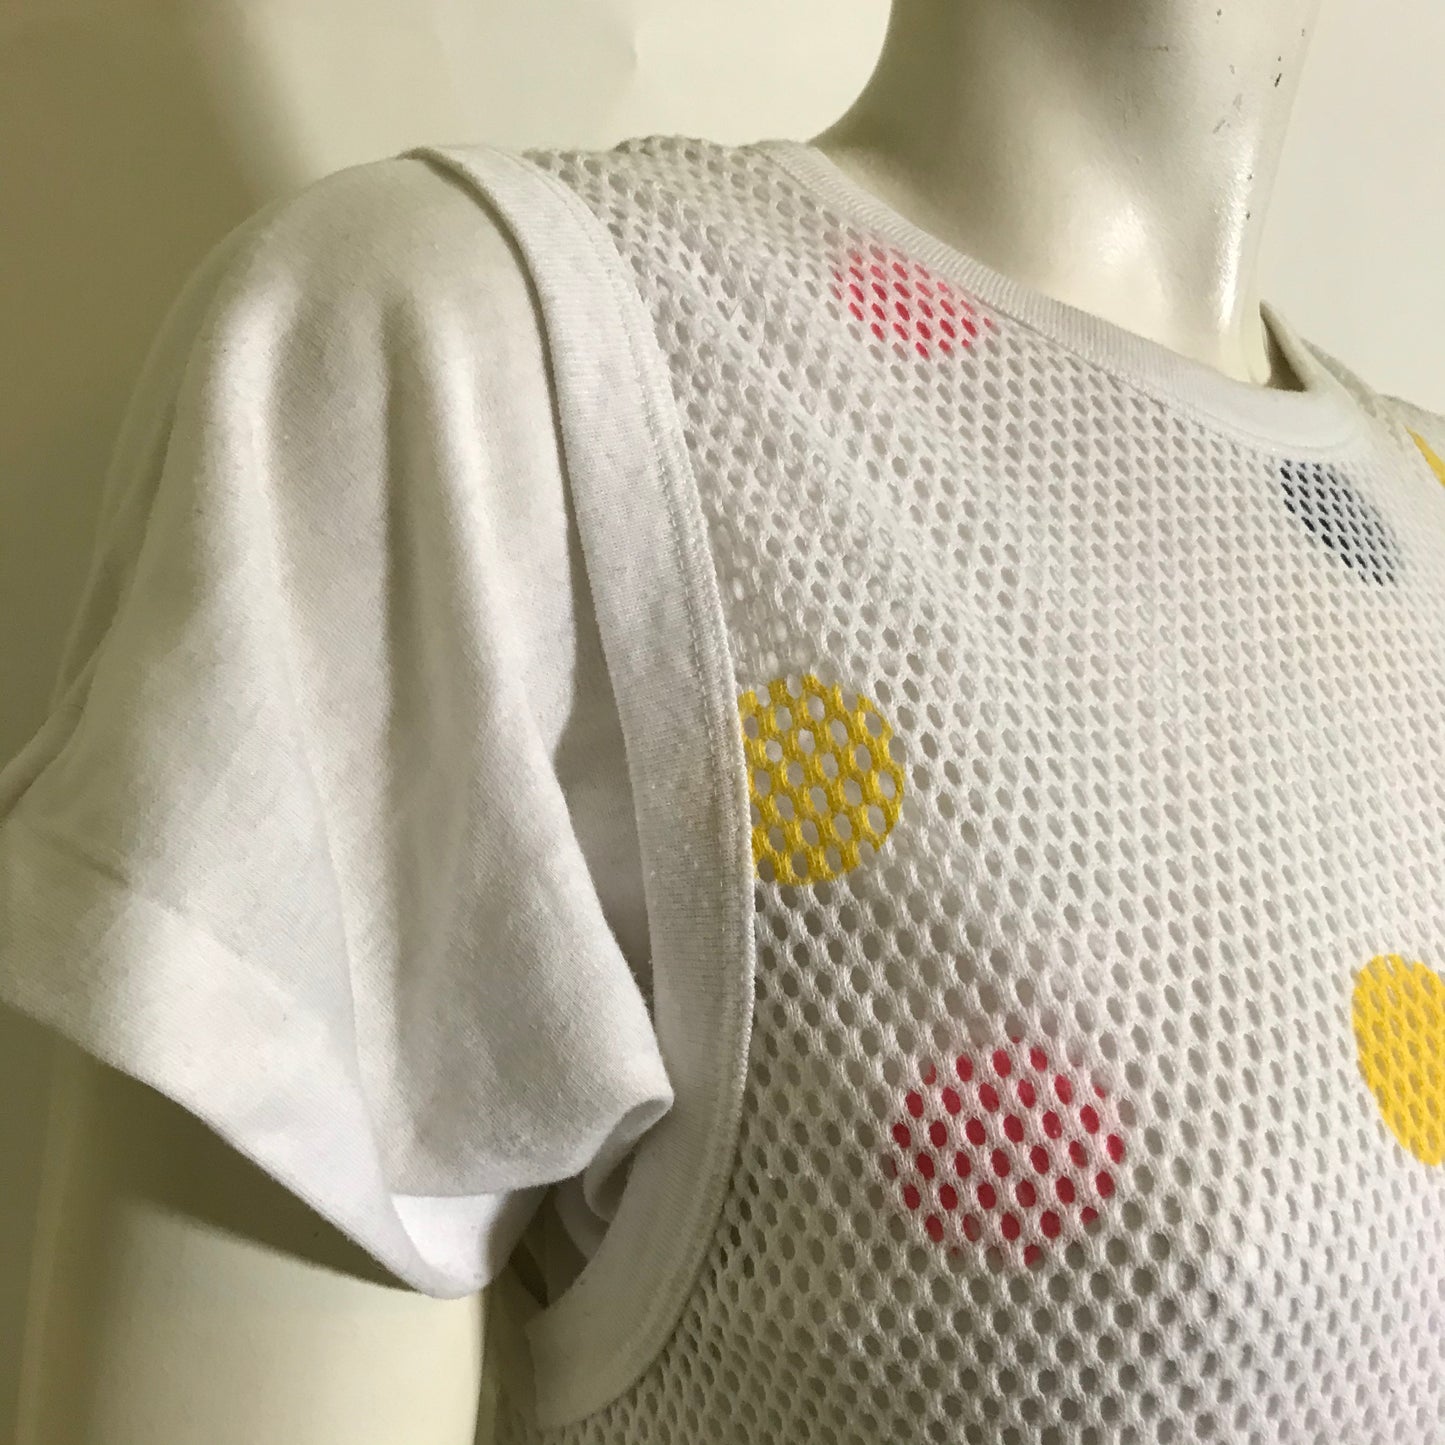 Polka Dot Knit Tee Shirt with White Mesh Overlay circa 1980s